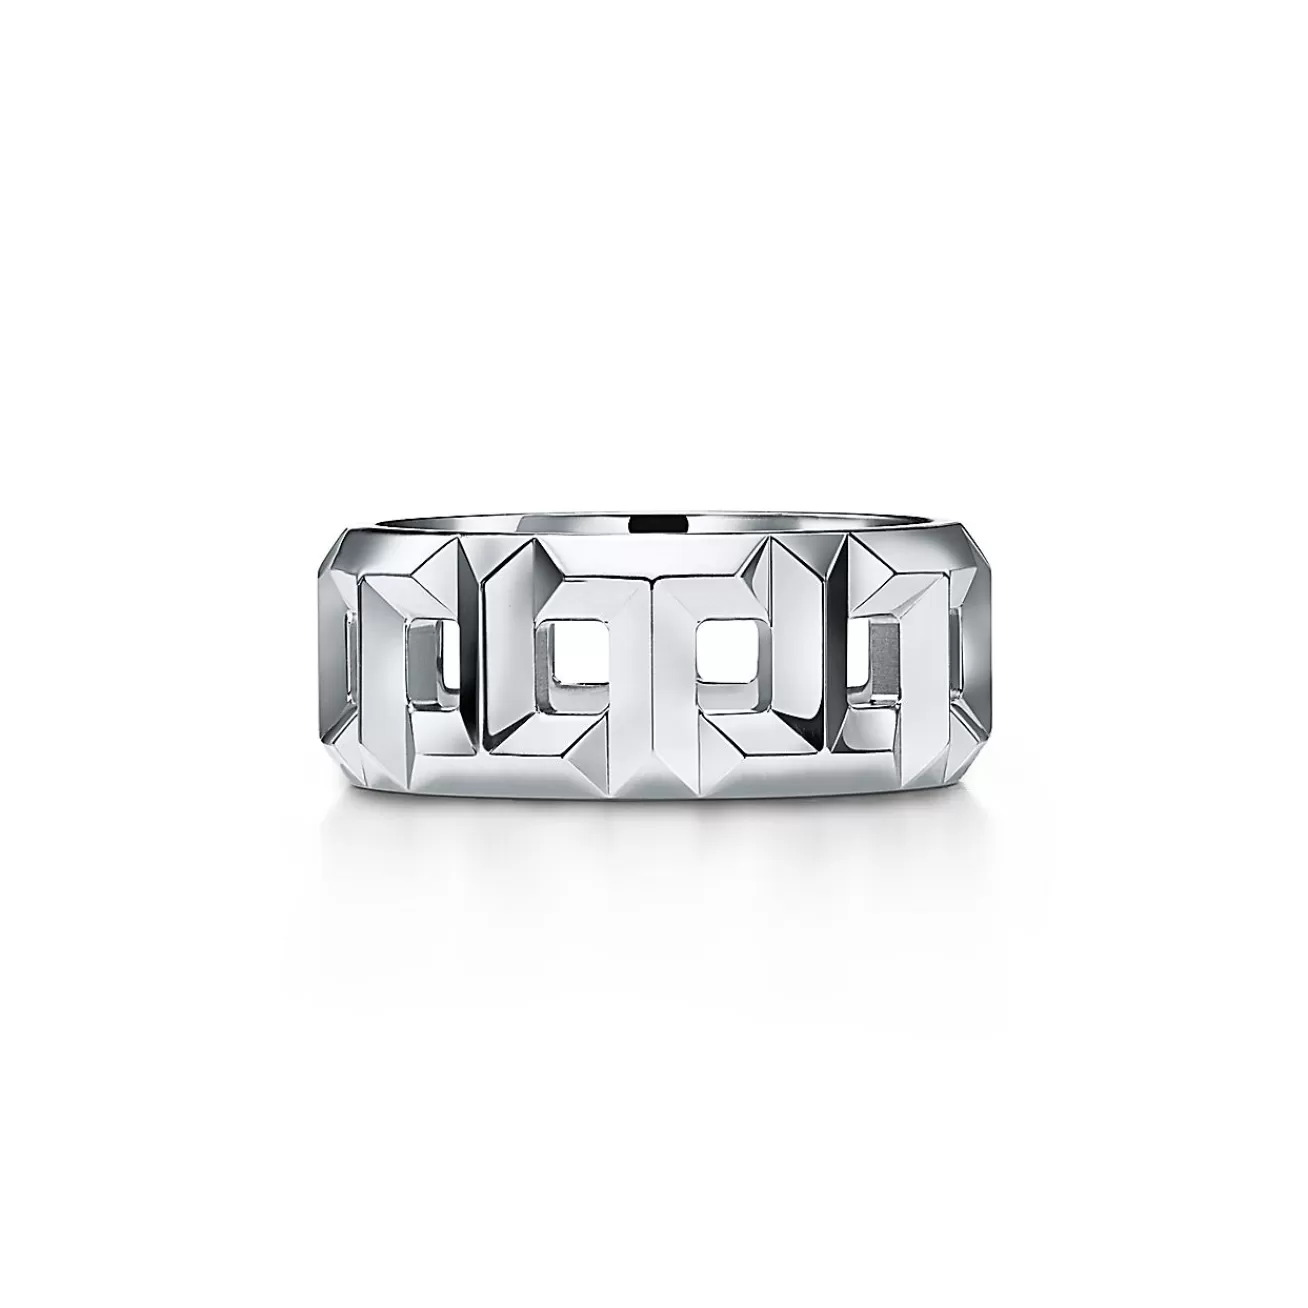 Tiffany & Co. Tiffany T True Ring in White Gold, 8 mm Wide | ^ Rings | Tiffany T